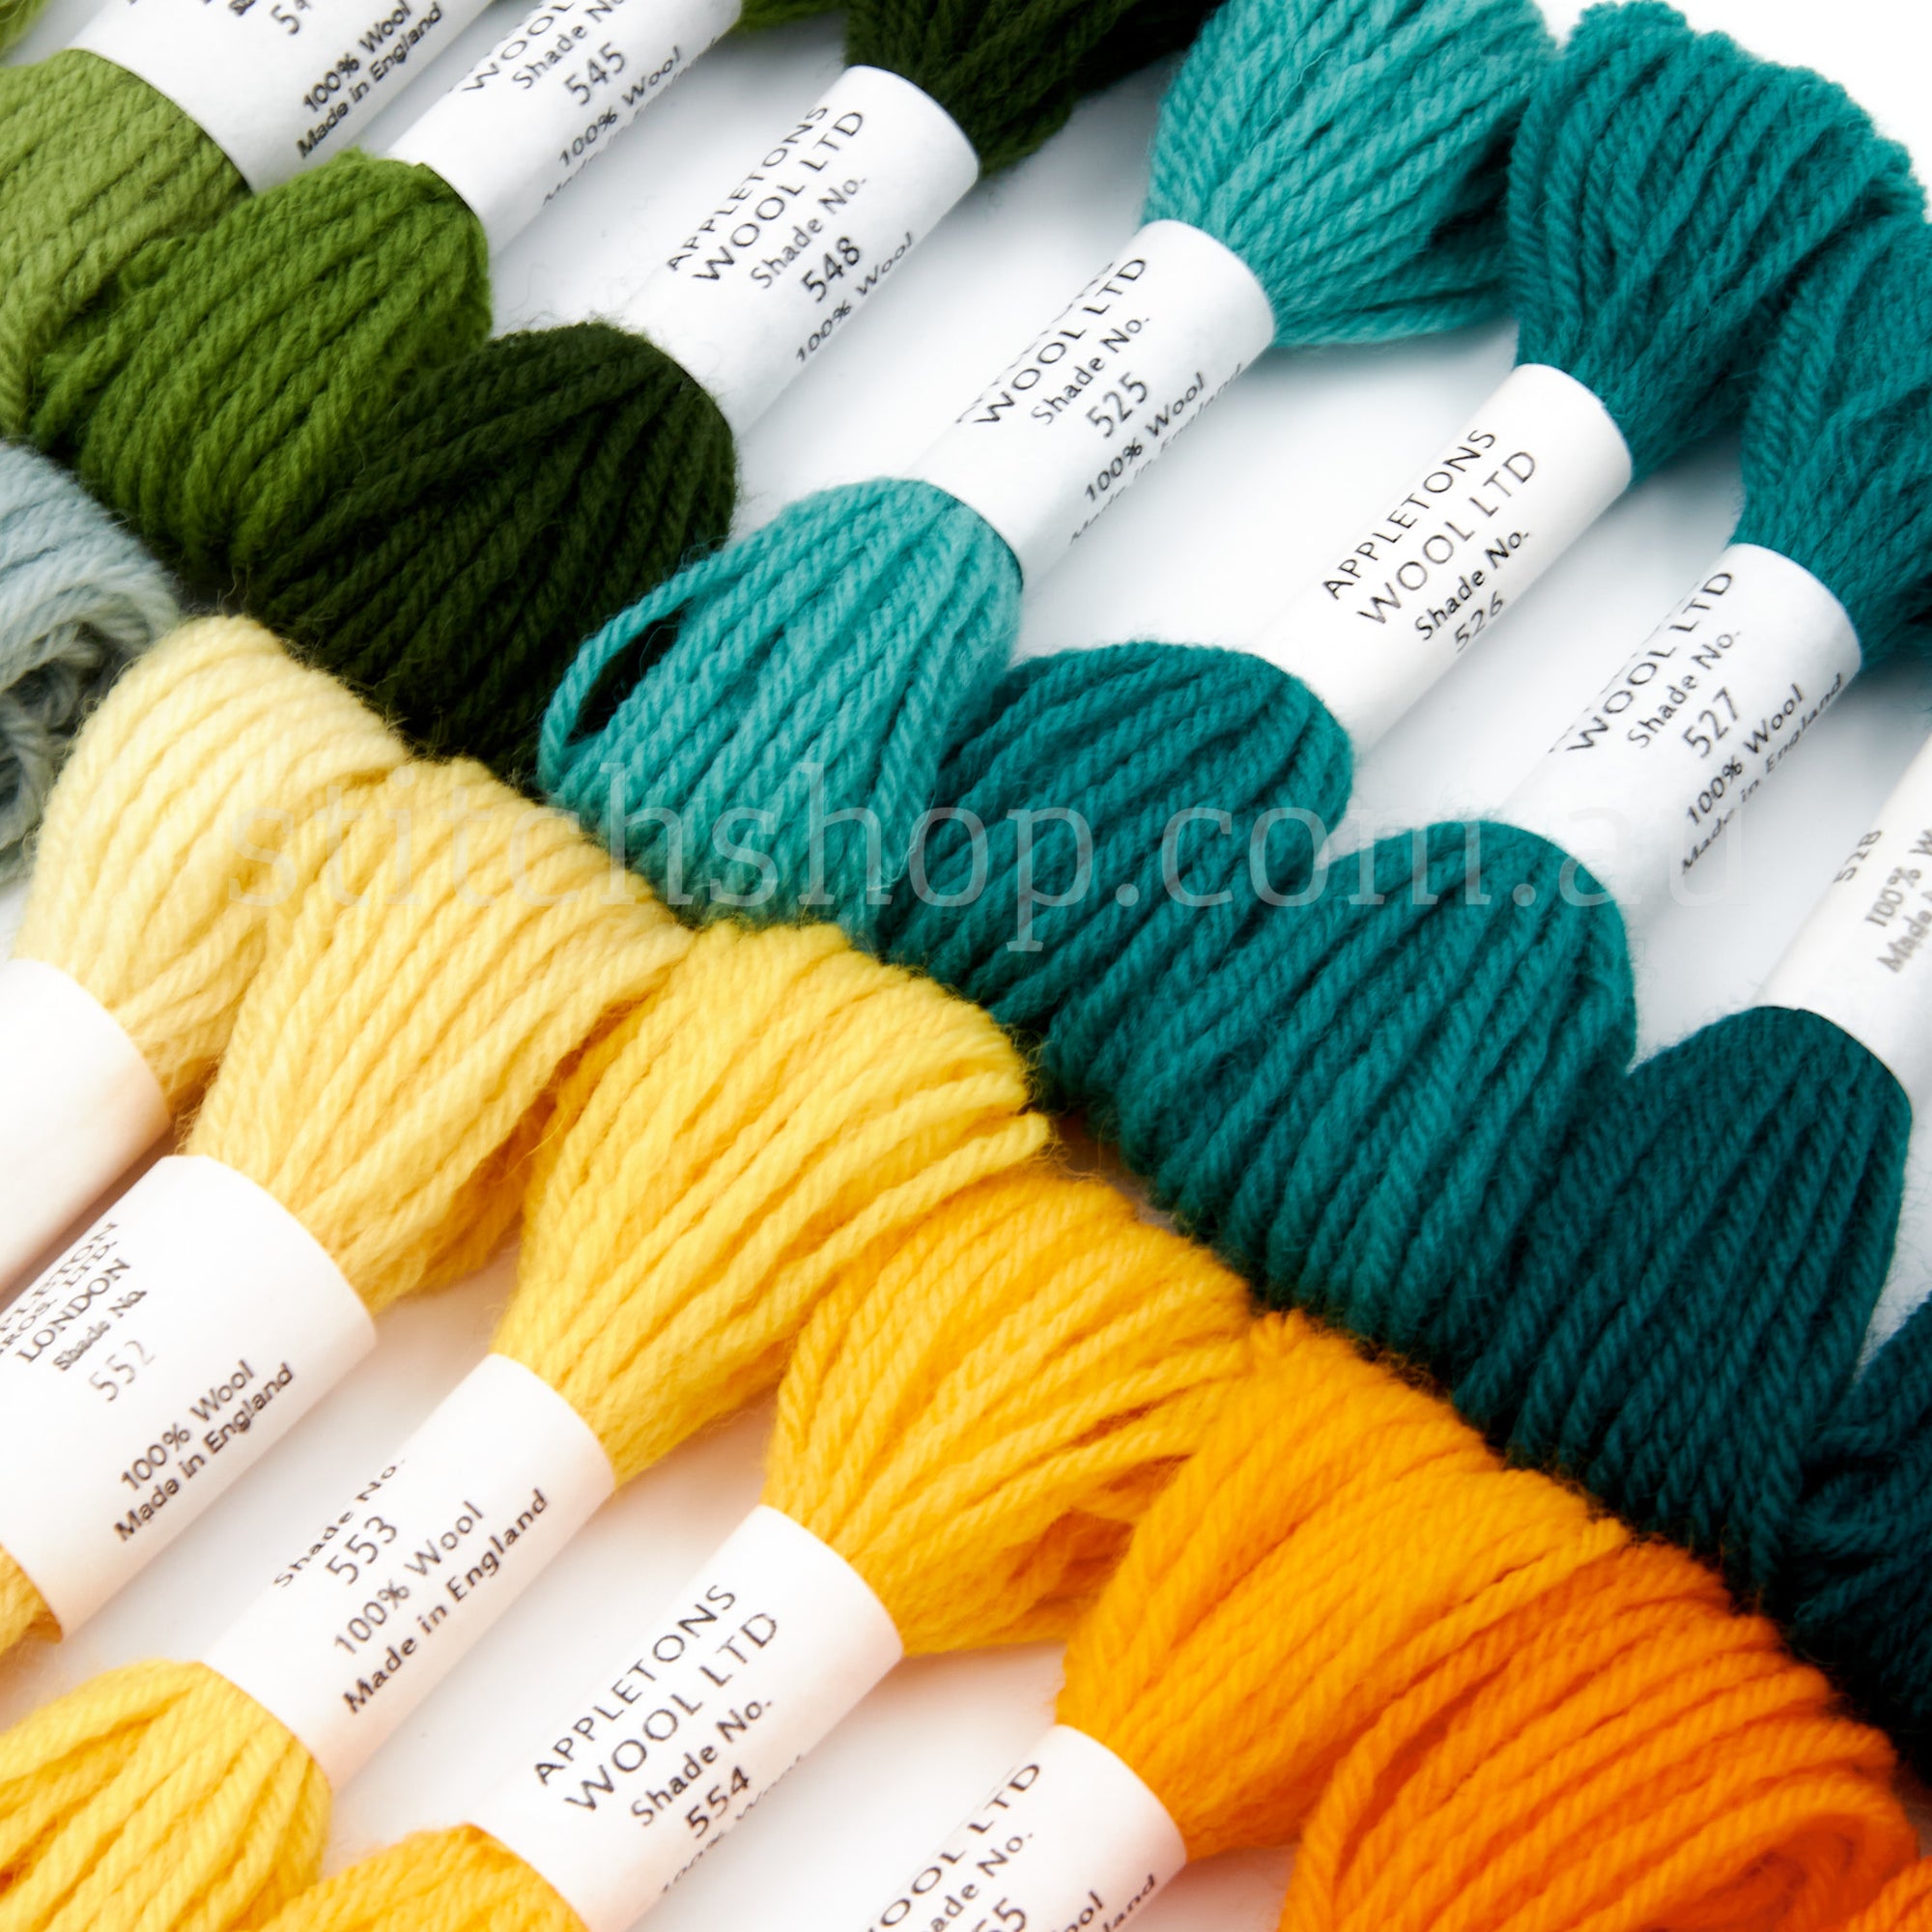 Appletons Tapestry Wool 101-335